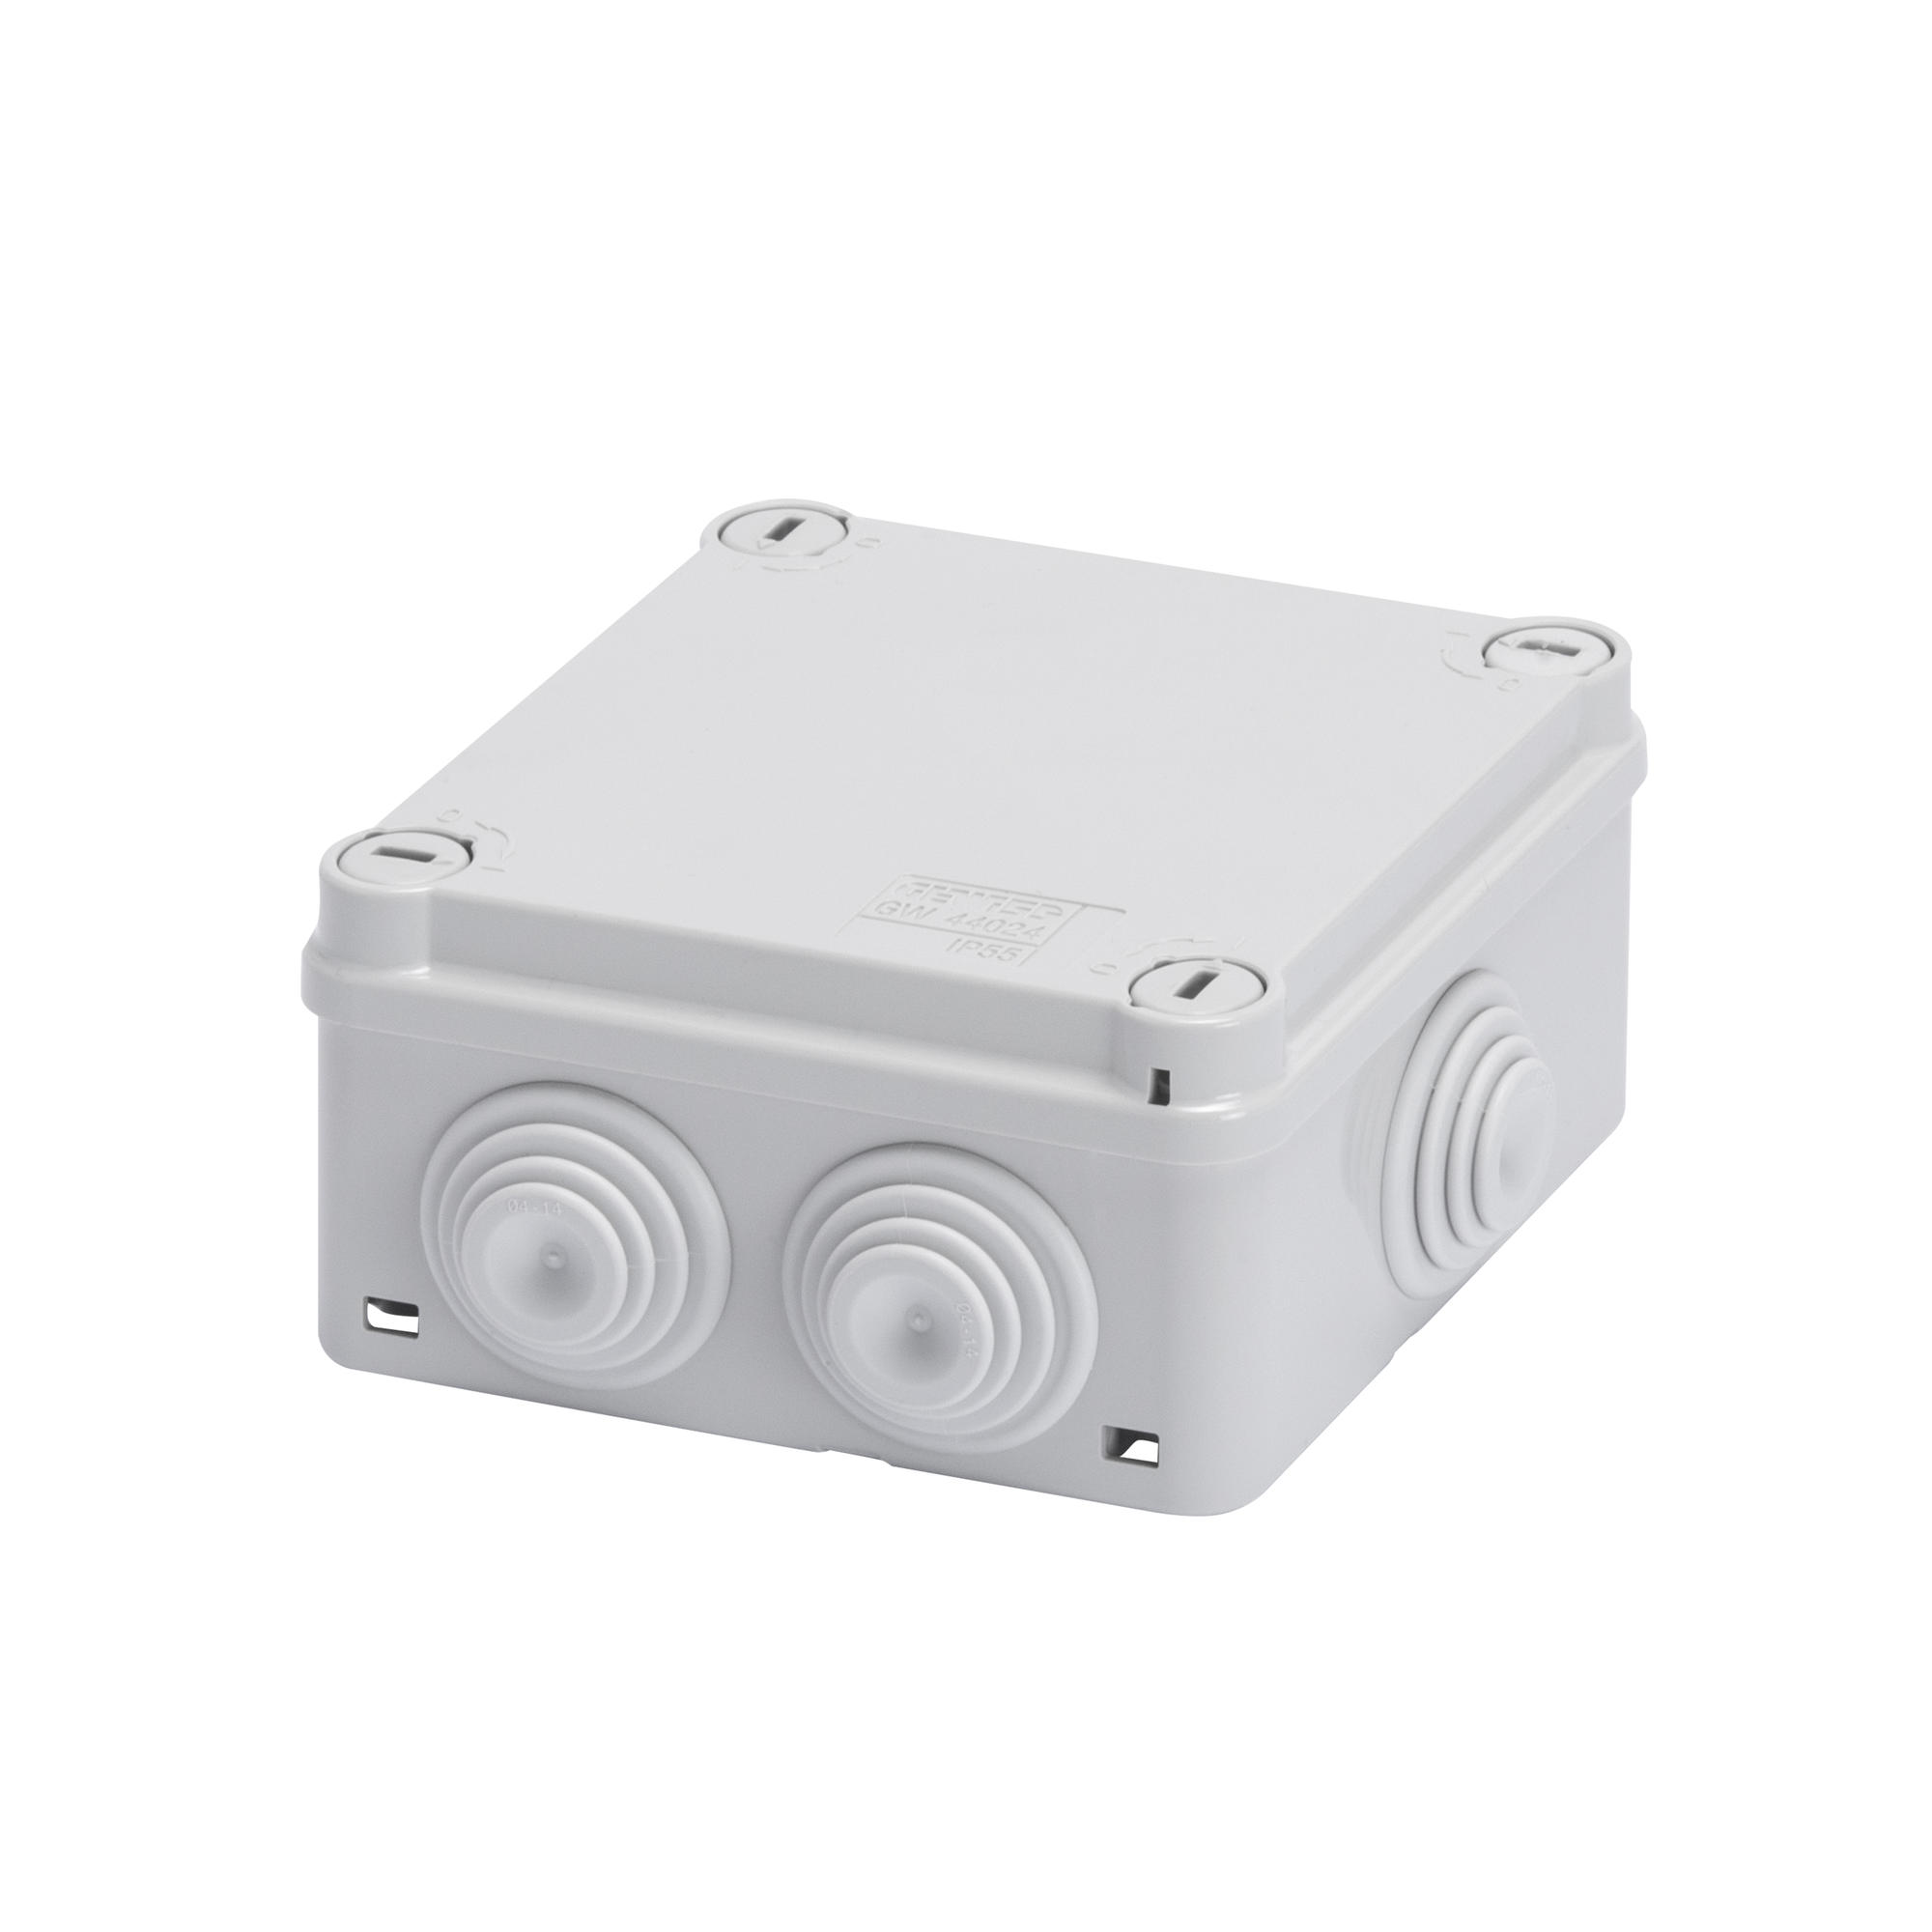 Caja para aparatos sistema de 3 plazas estaño gris RAL 7035 IP55 GW27043 Gewiss